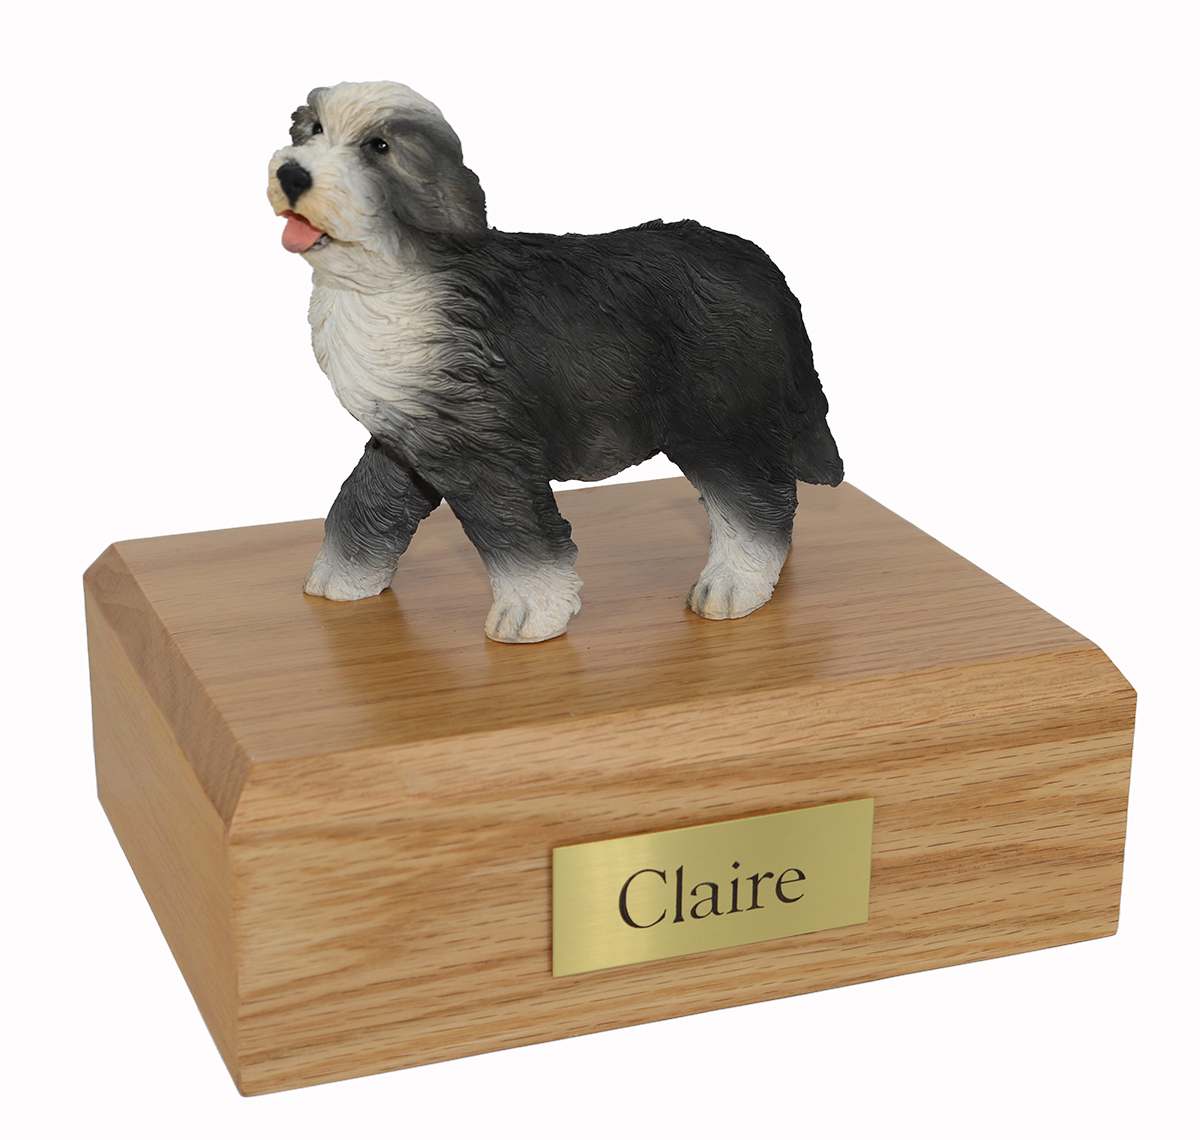 Dog, Bearded Collie - Figurine Urn